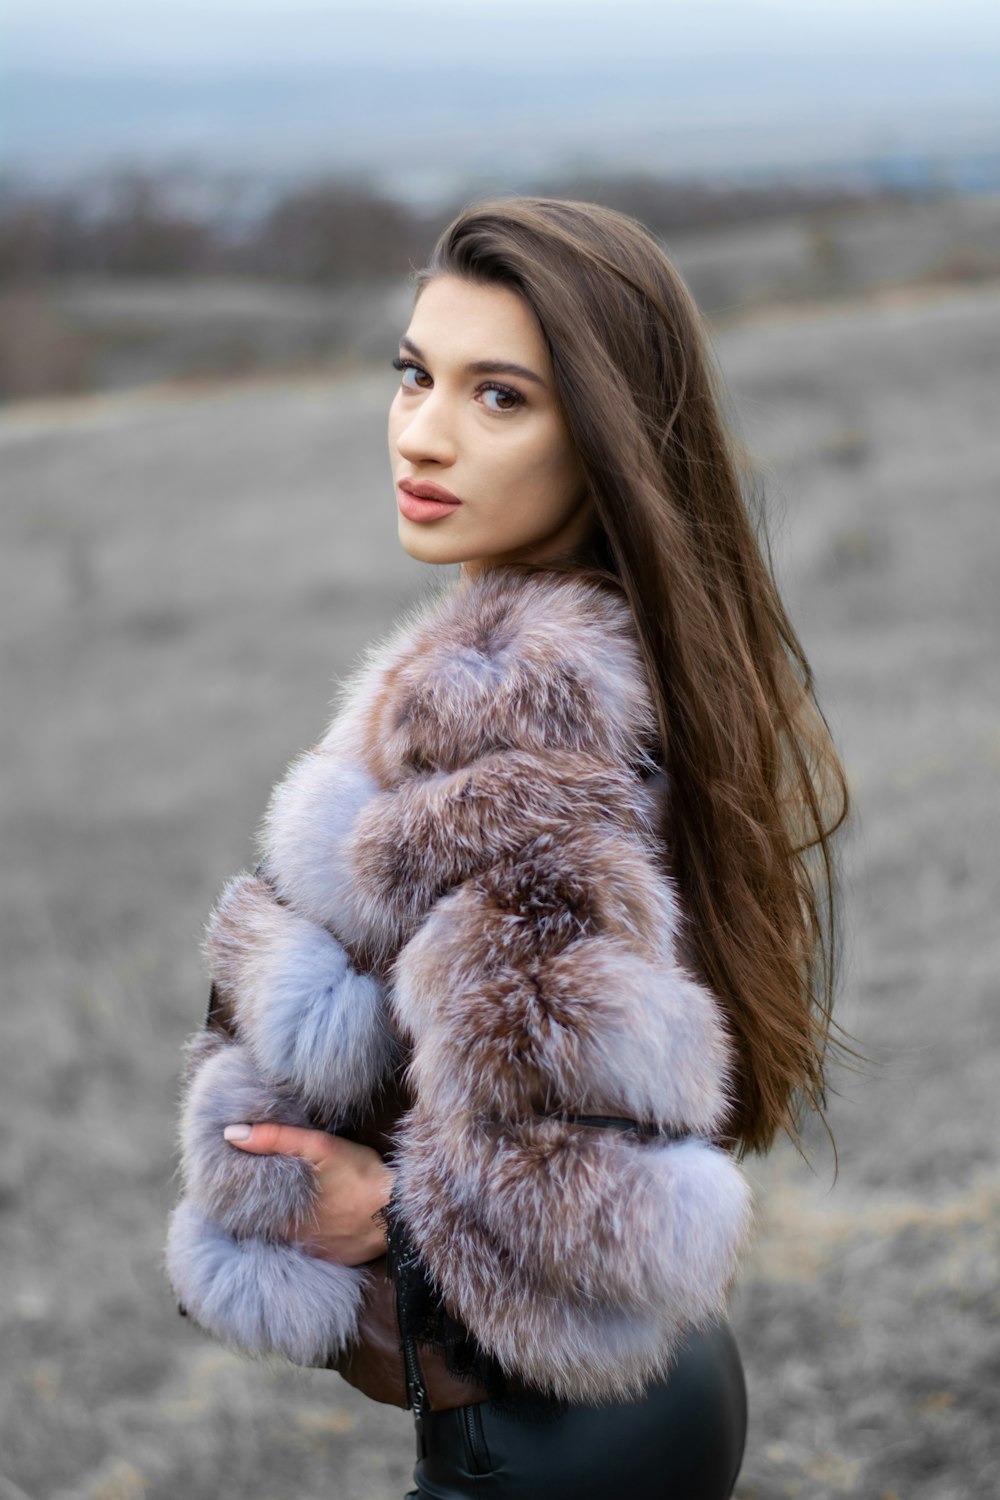 Fur Coat Pictures | Download Free Images on Unsplash